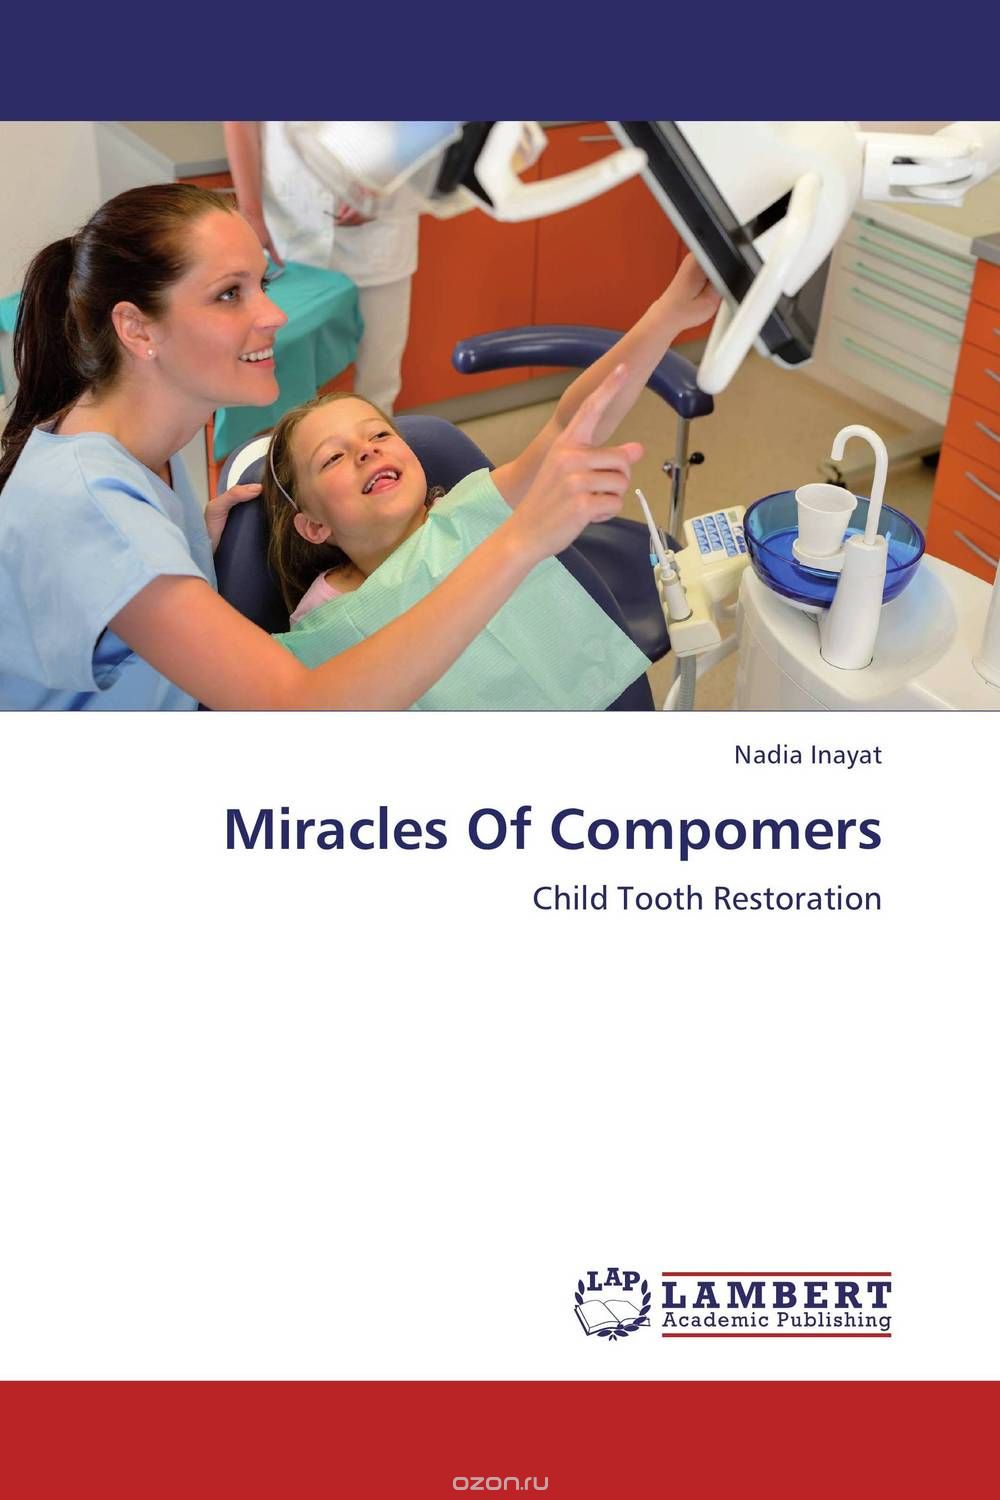 Скачать книгу "Miracles Of Compomers"